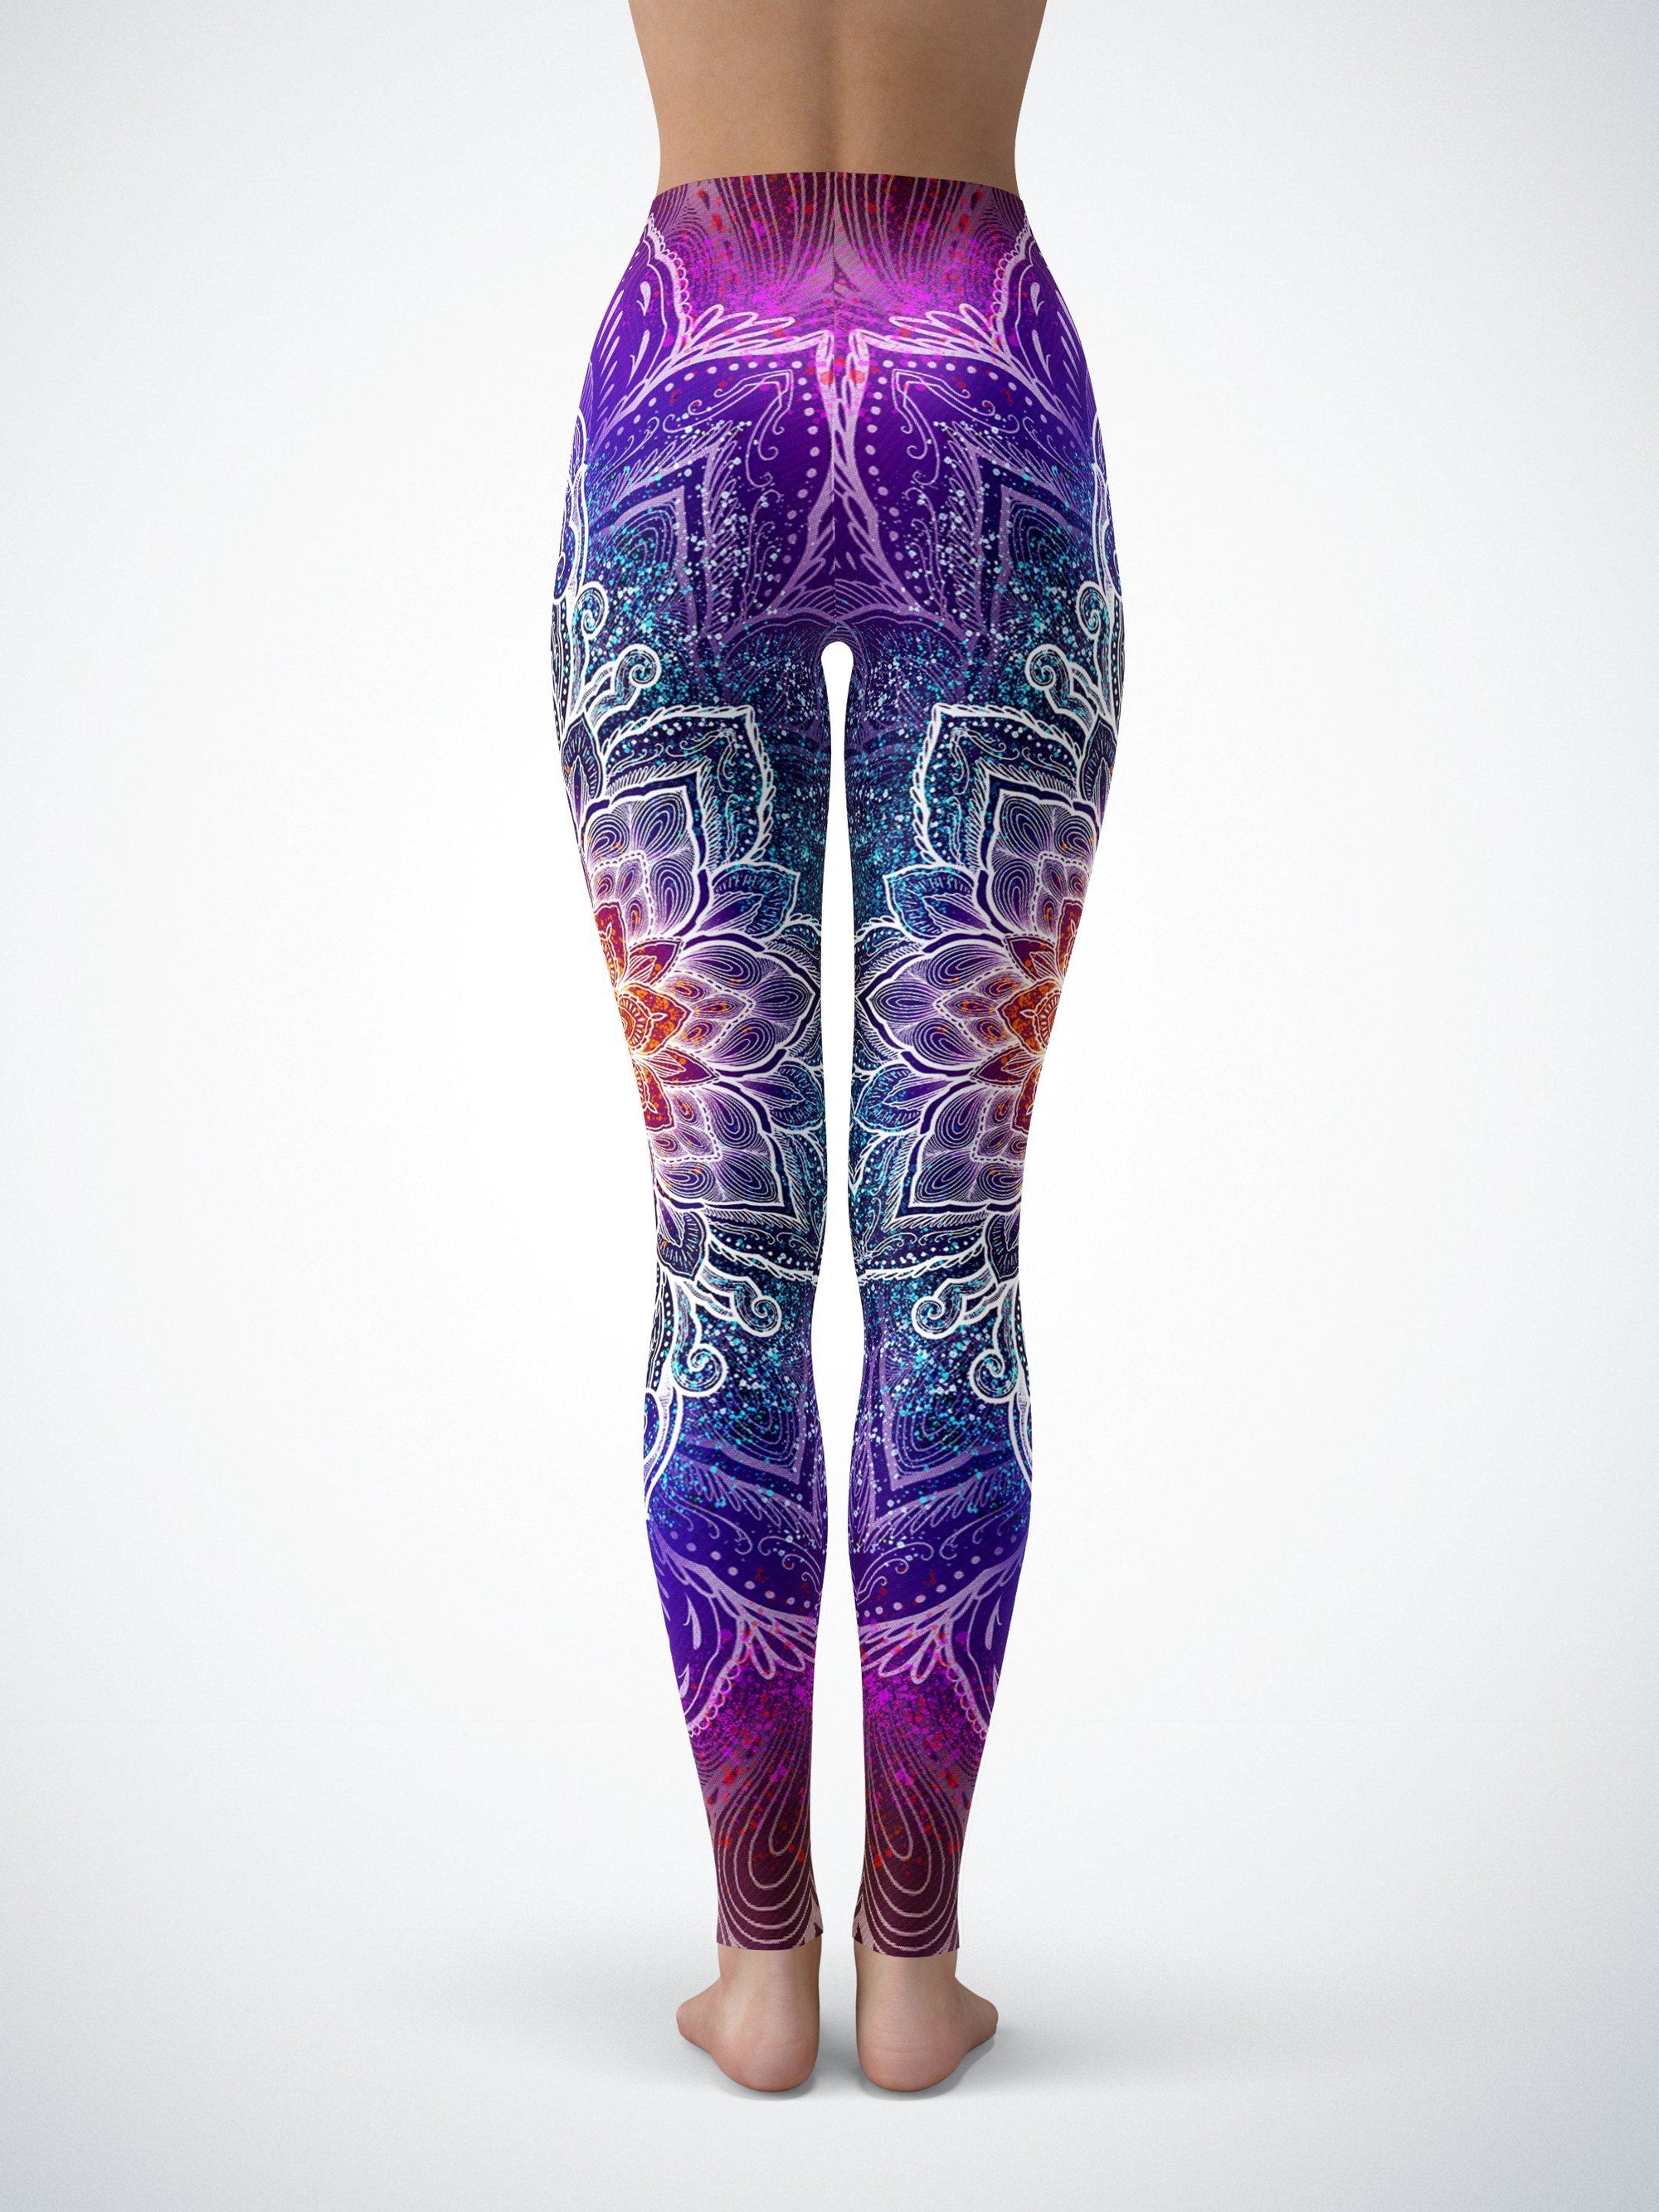 Spark of Joy Yoga Pants - Electro Threads